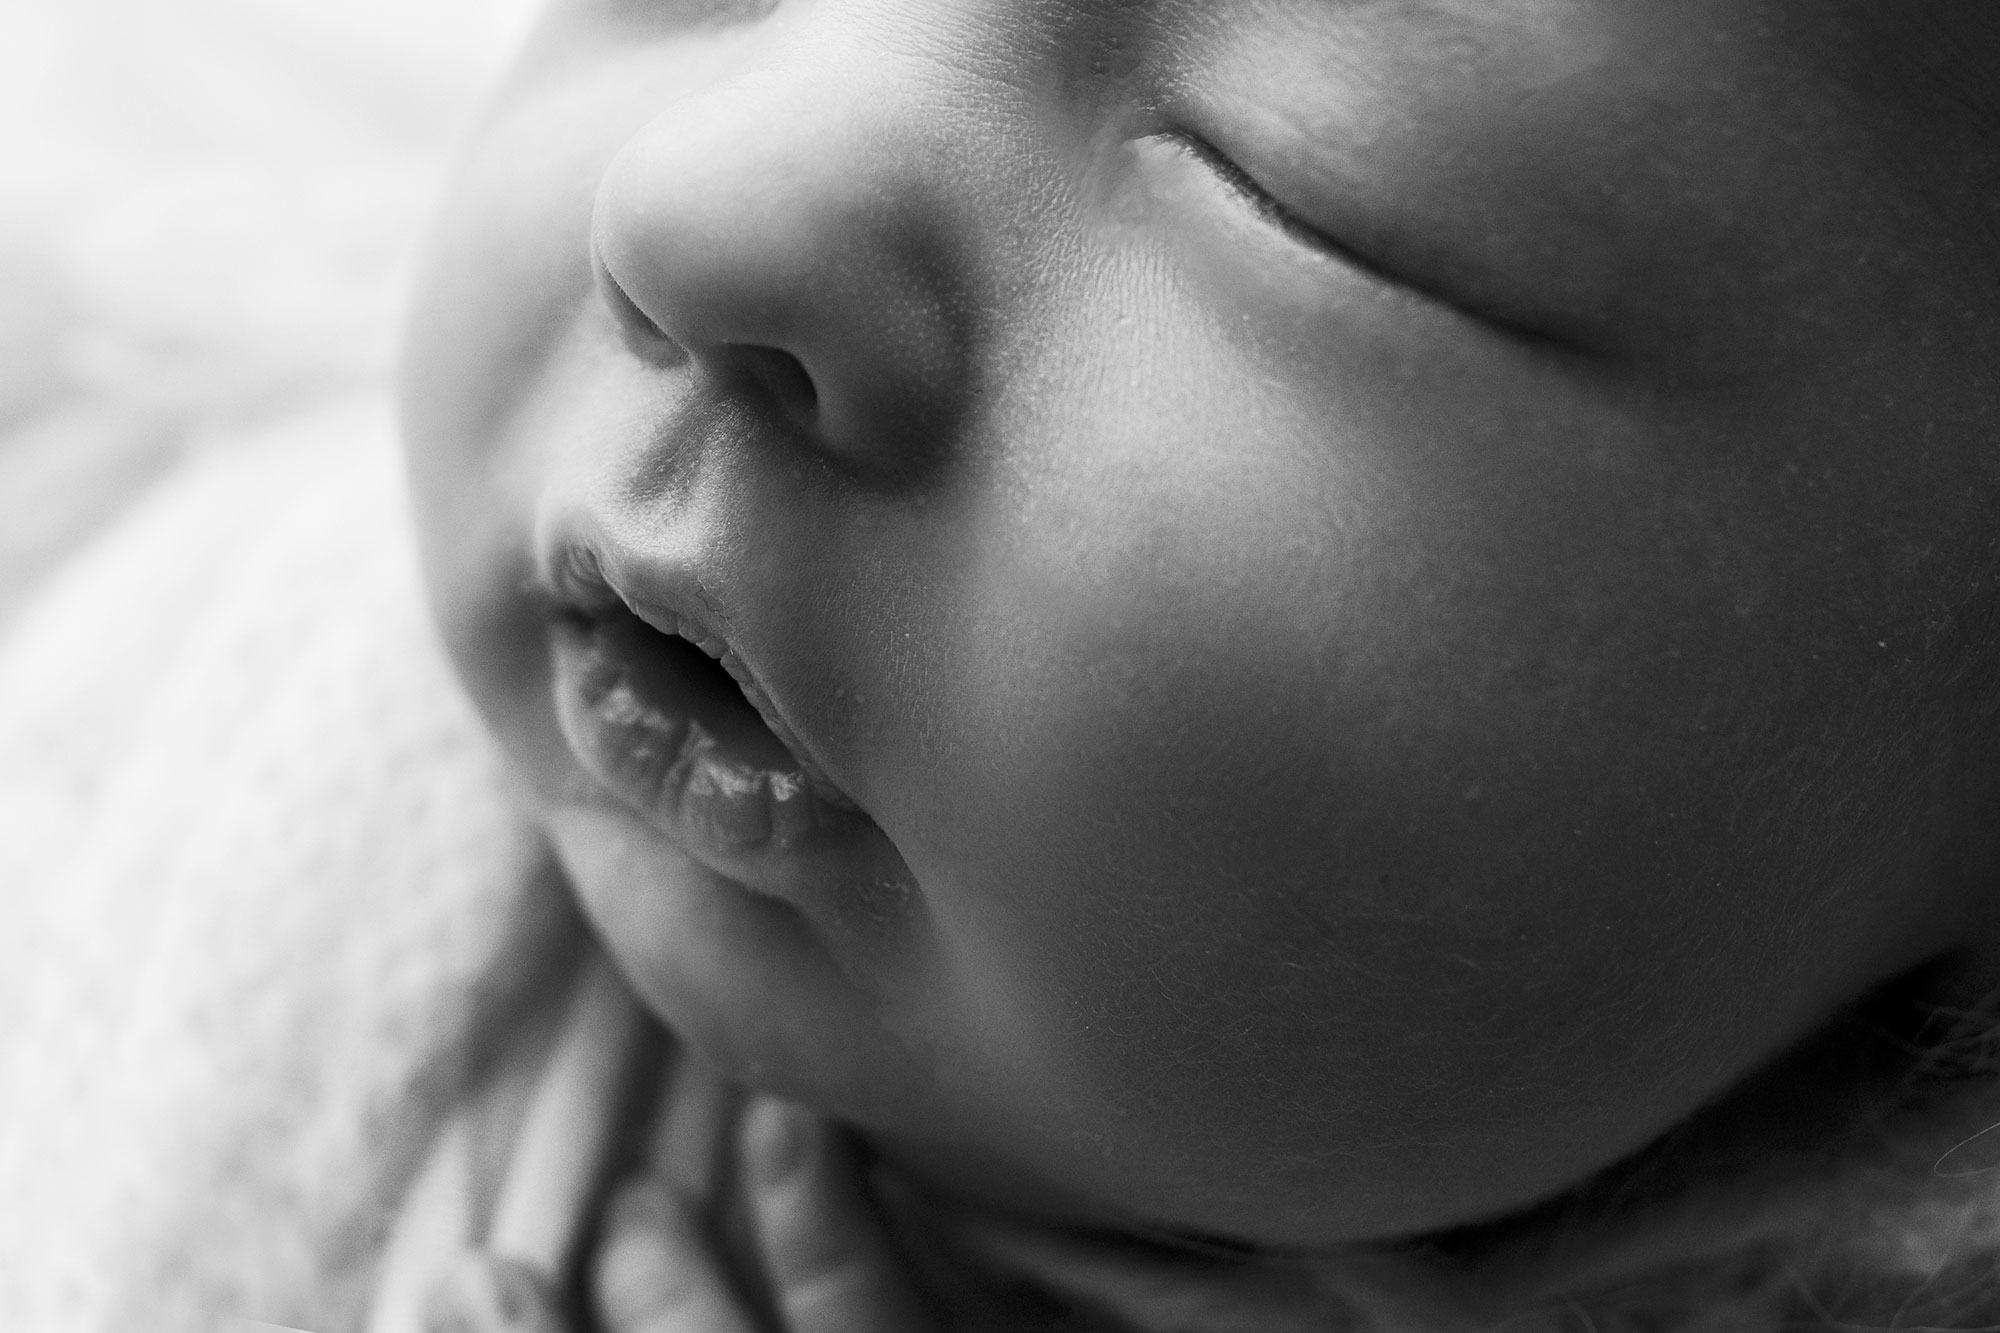 simple newborn photography ideas